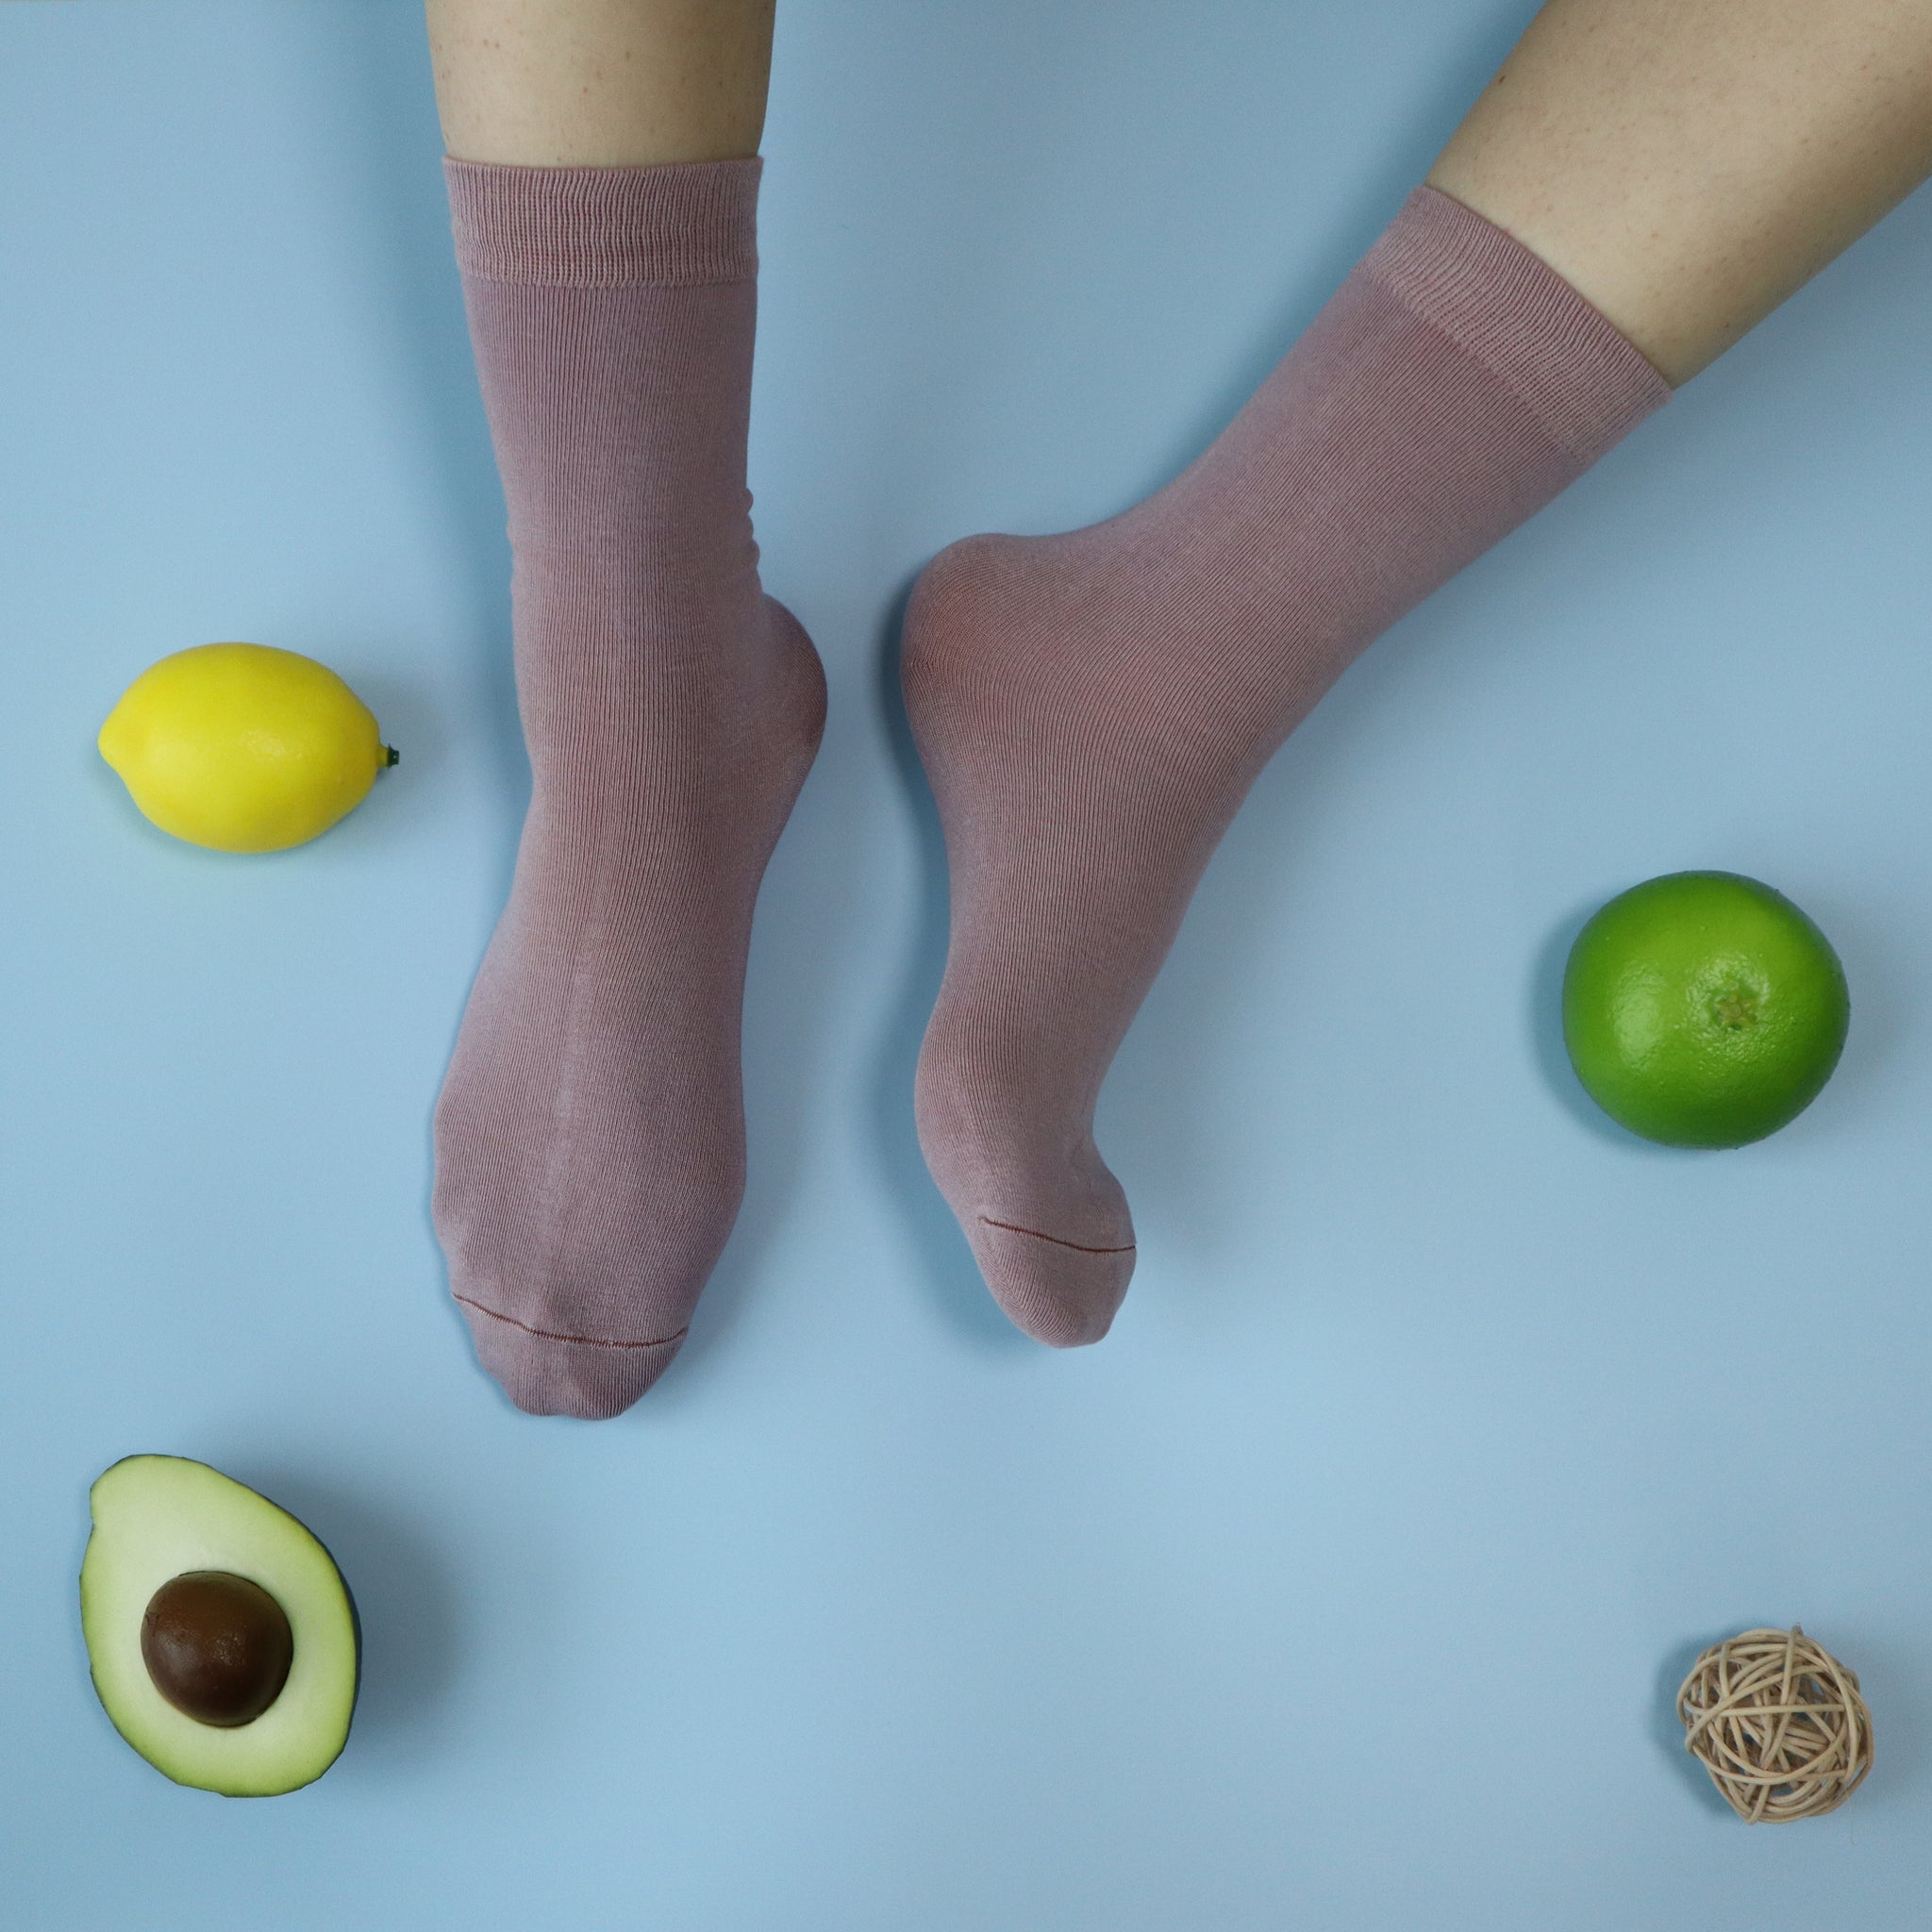 SERISIMPLE Makes its Mark With Environmentally Friendly Socks